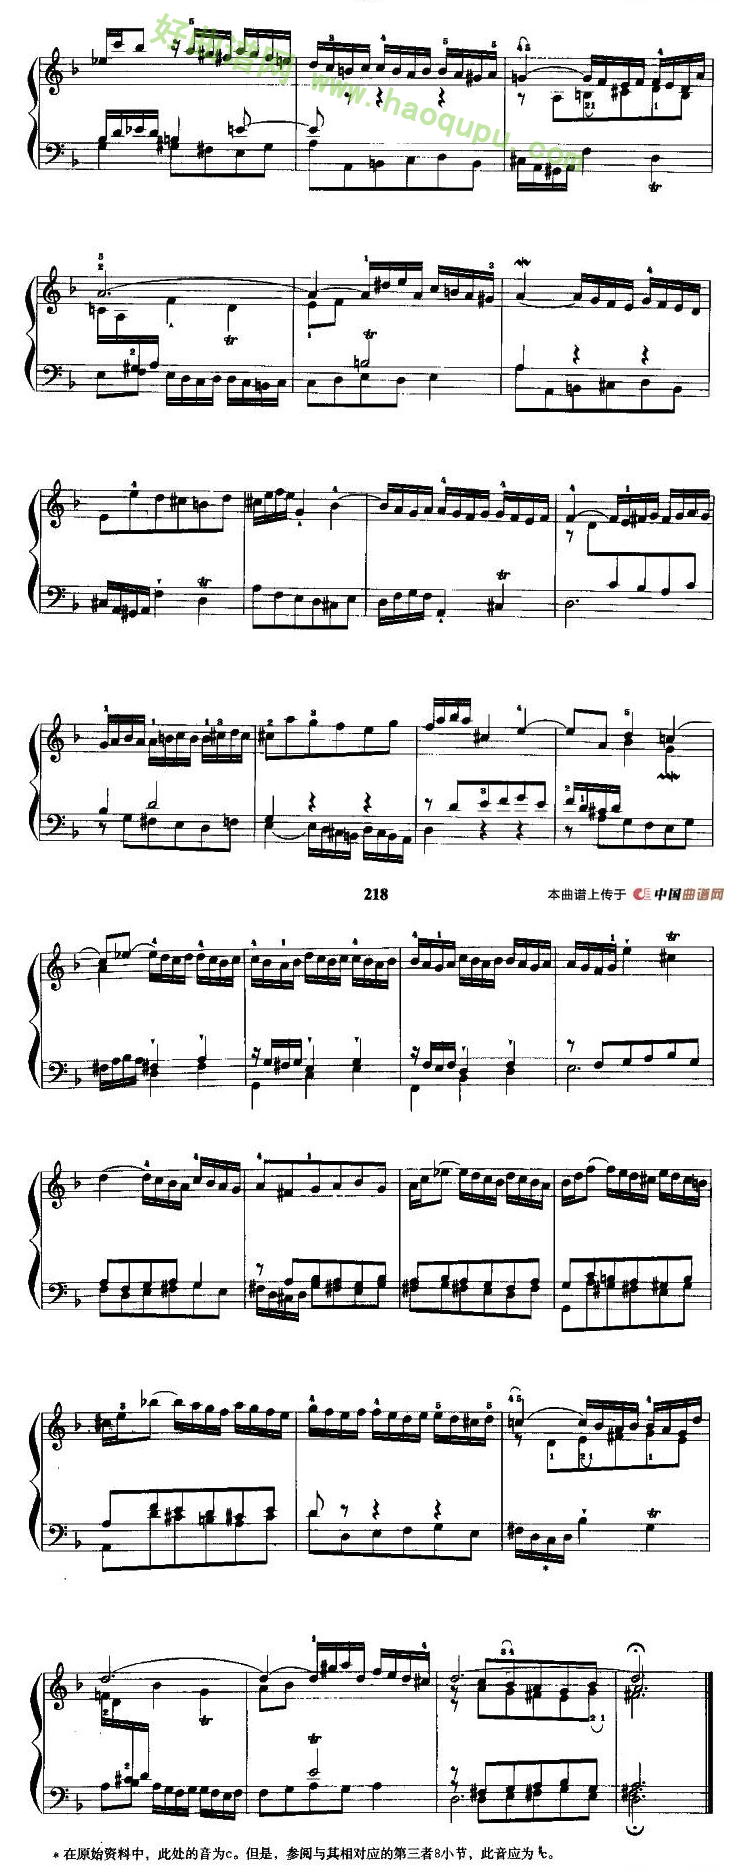 《d小调前奏曲与赋格》 手风琴曲谱第3张